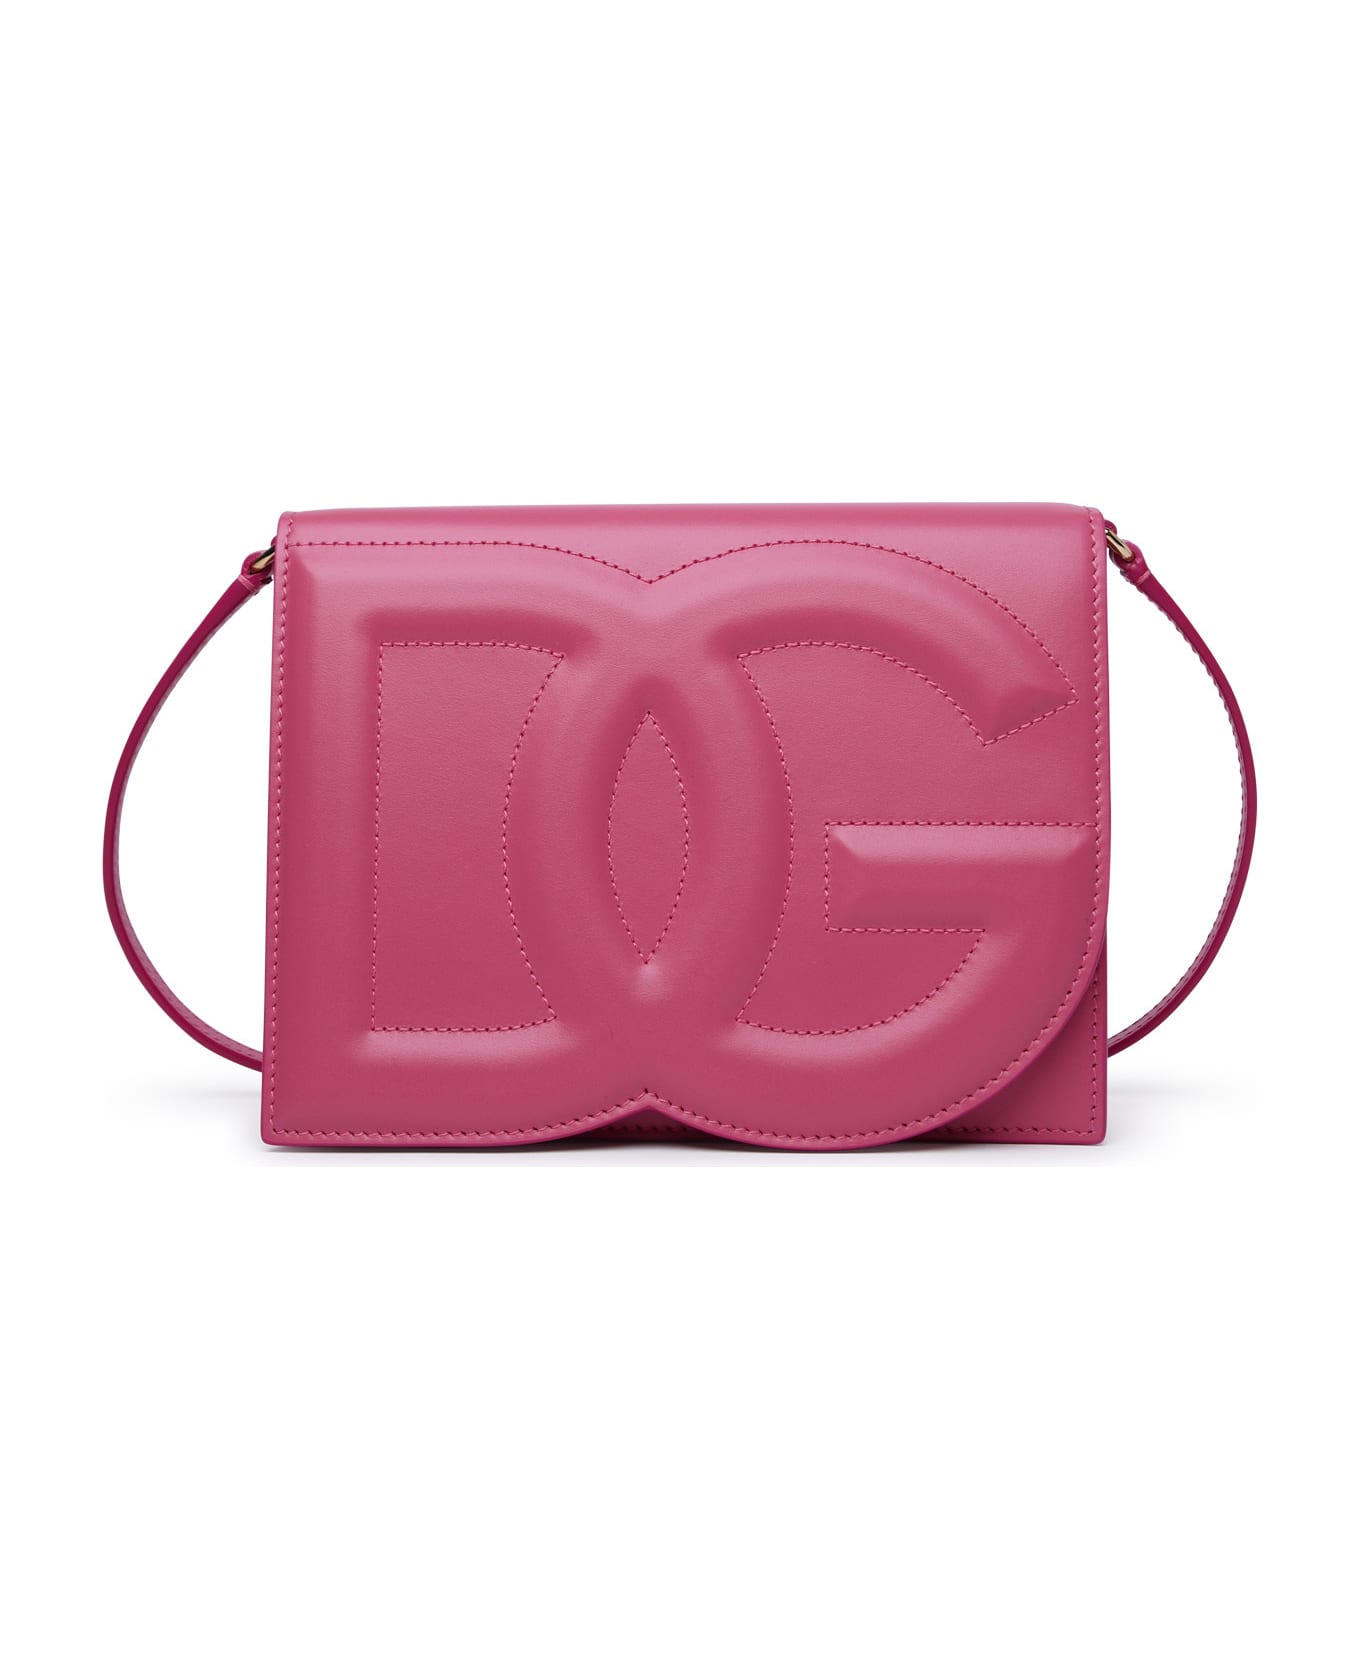 Dolce & Gabbana Fuchsia Leather Bag - Glicine ショルダーバッグ